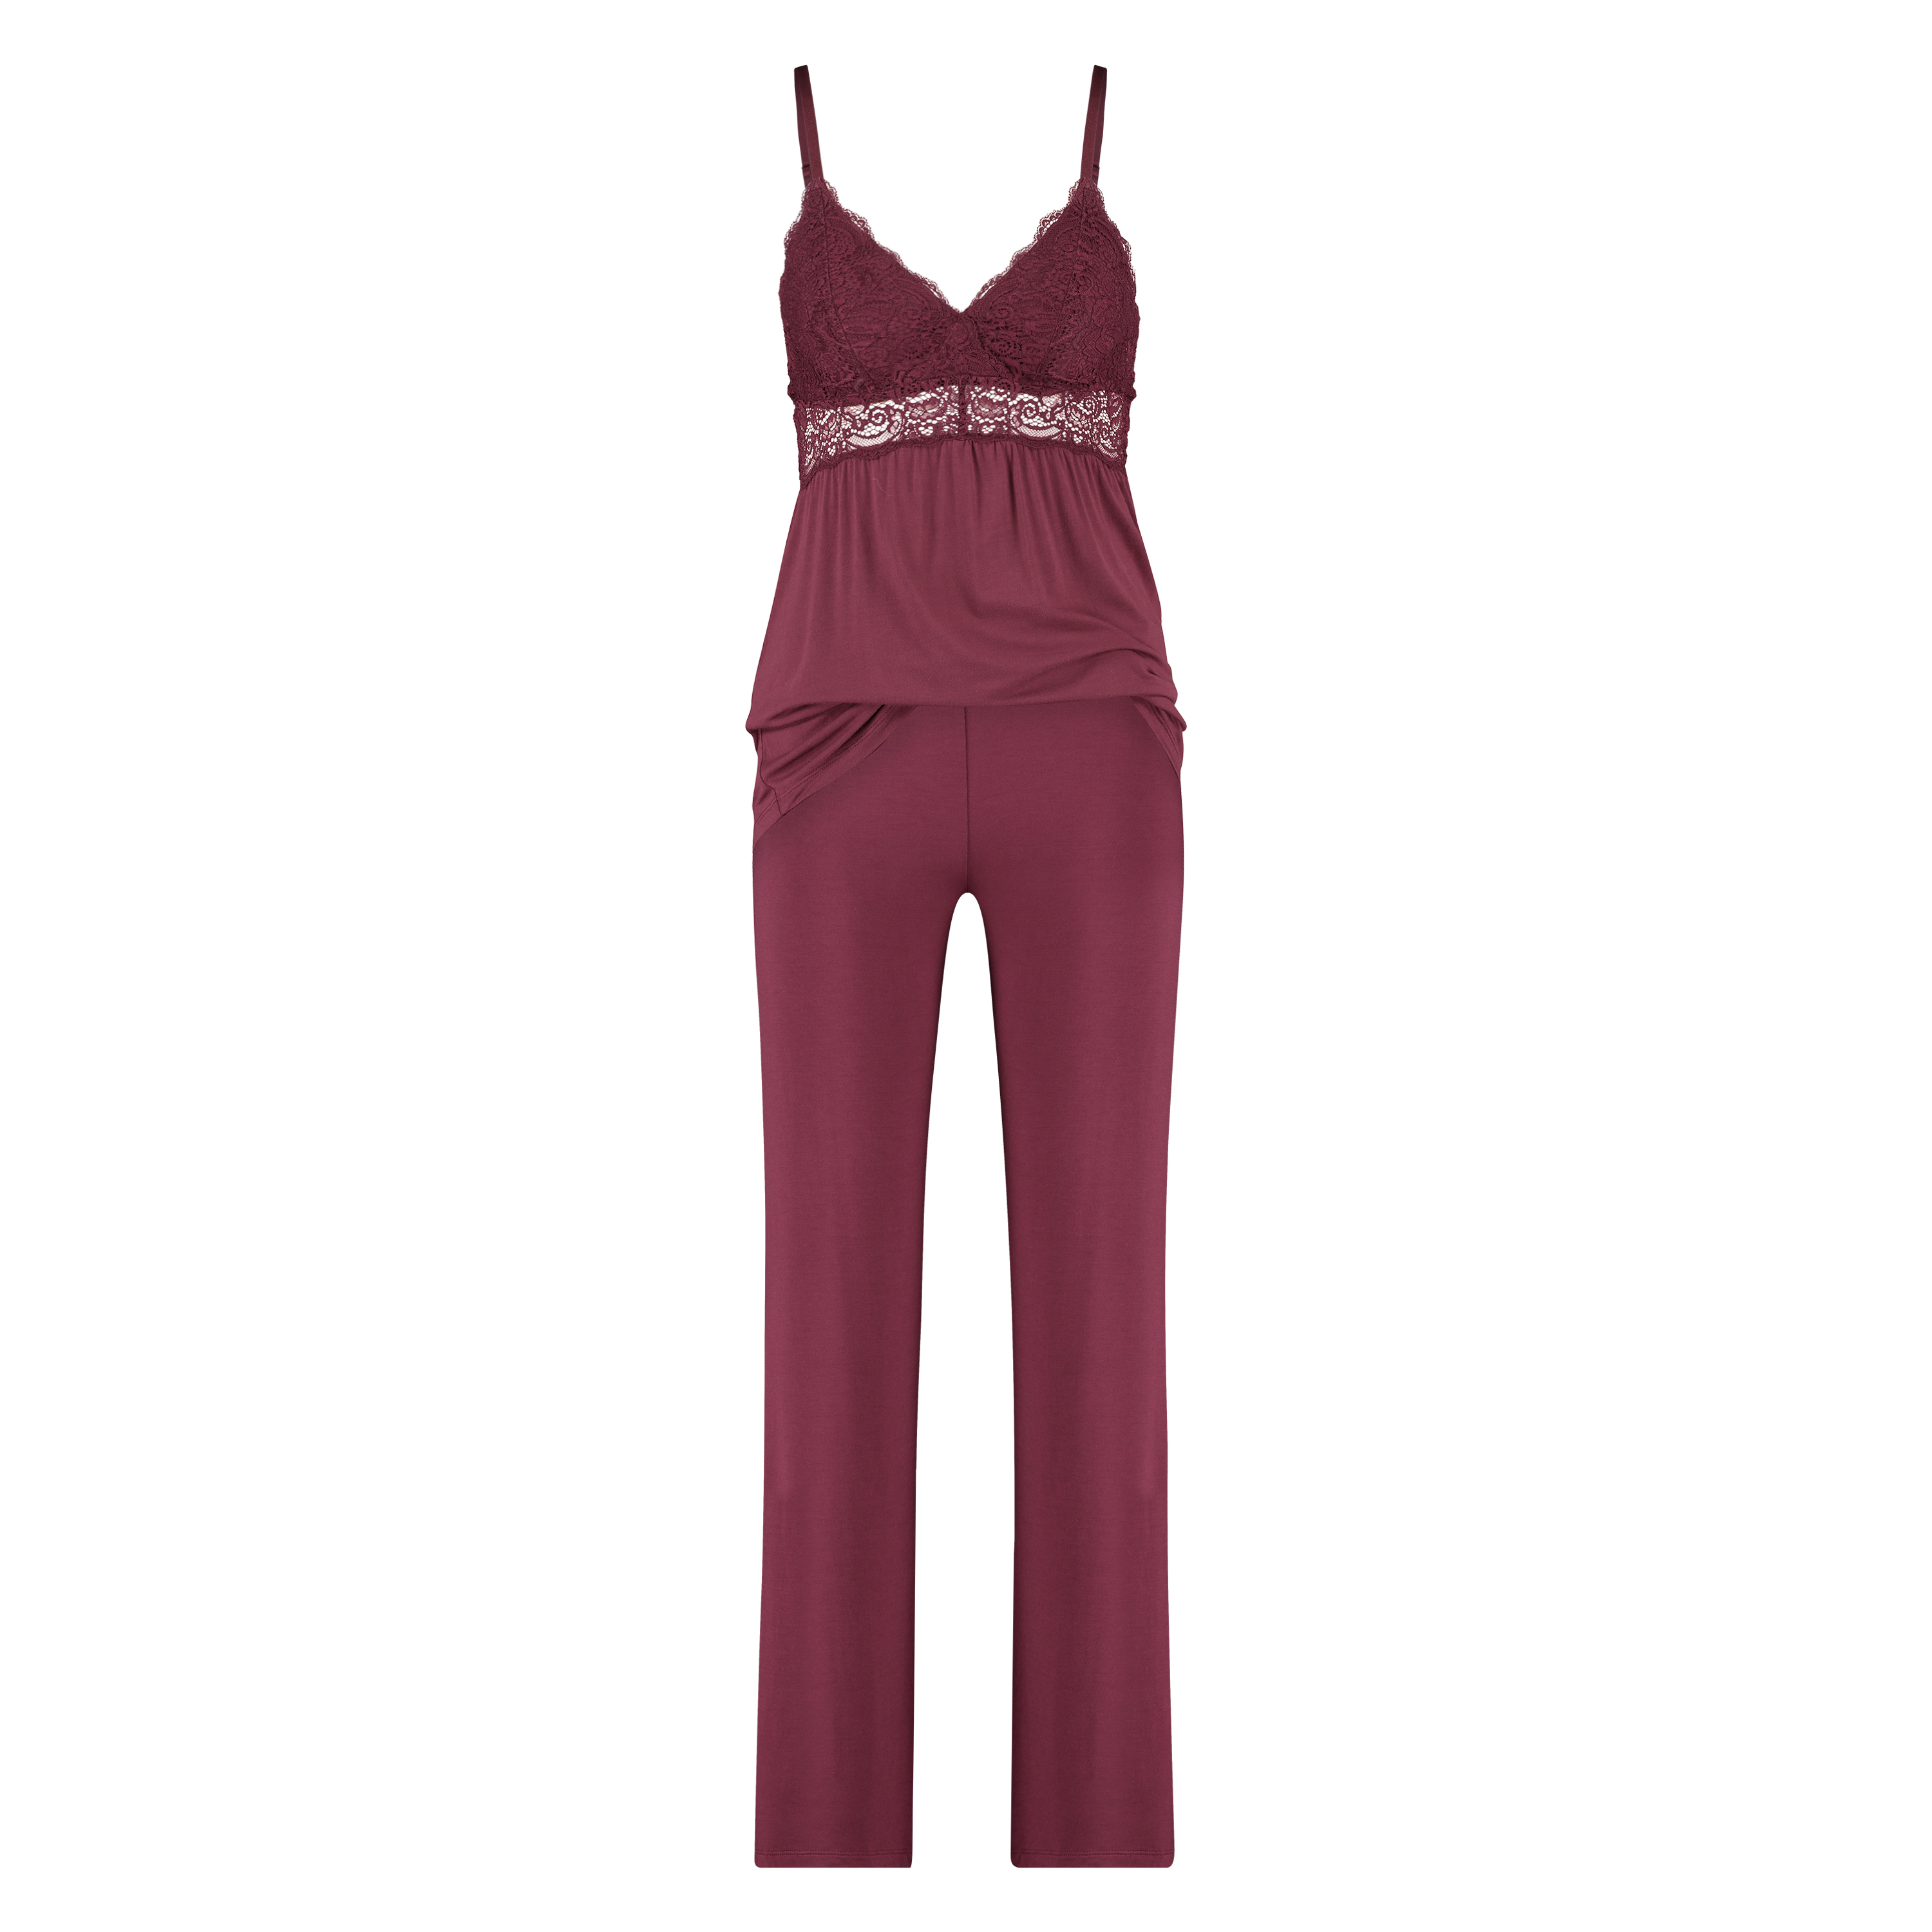 Vera Lace Pyjama Set, Red, main